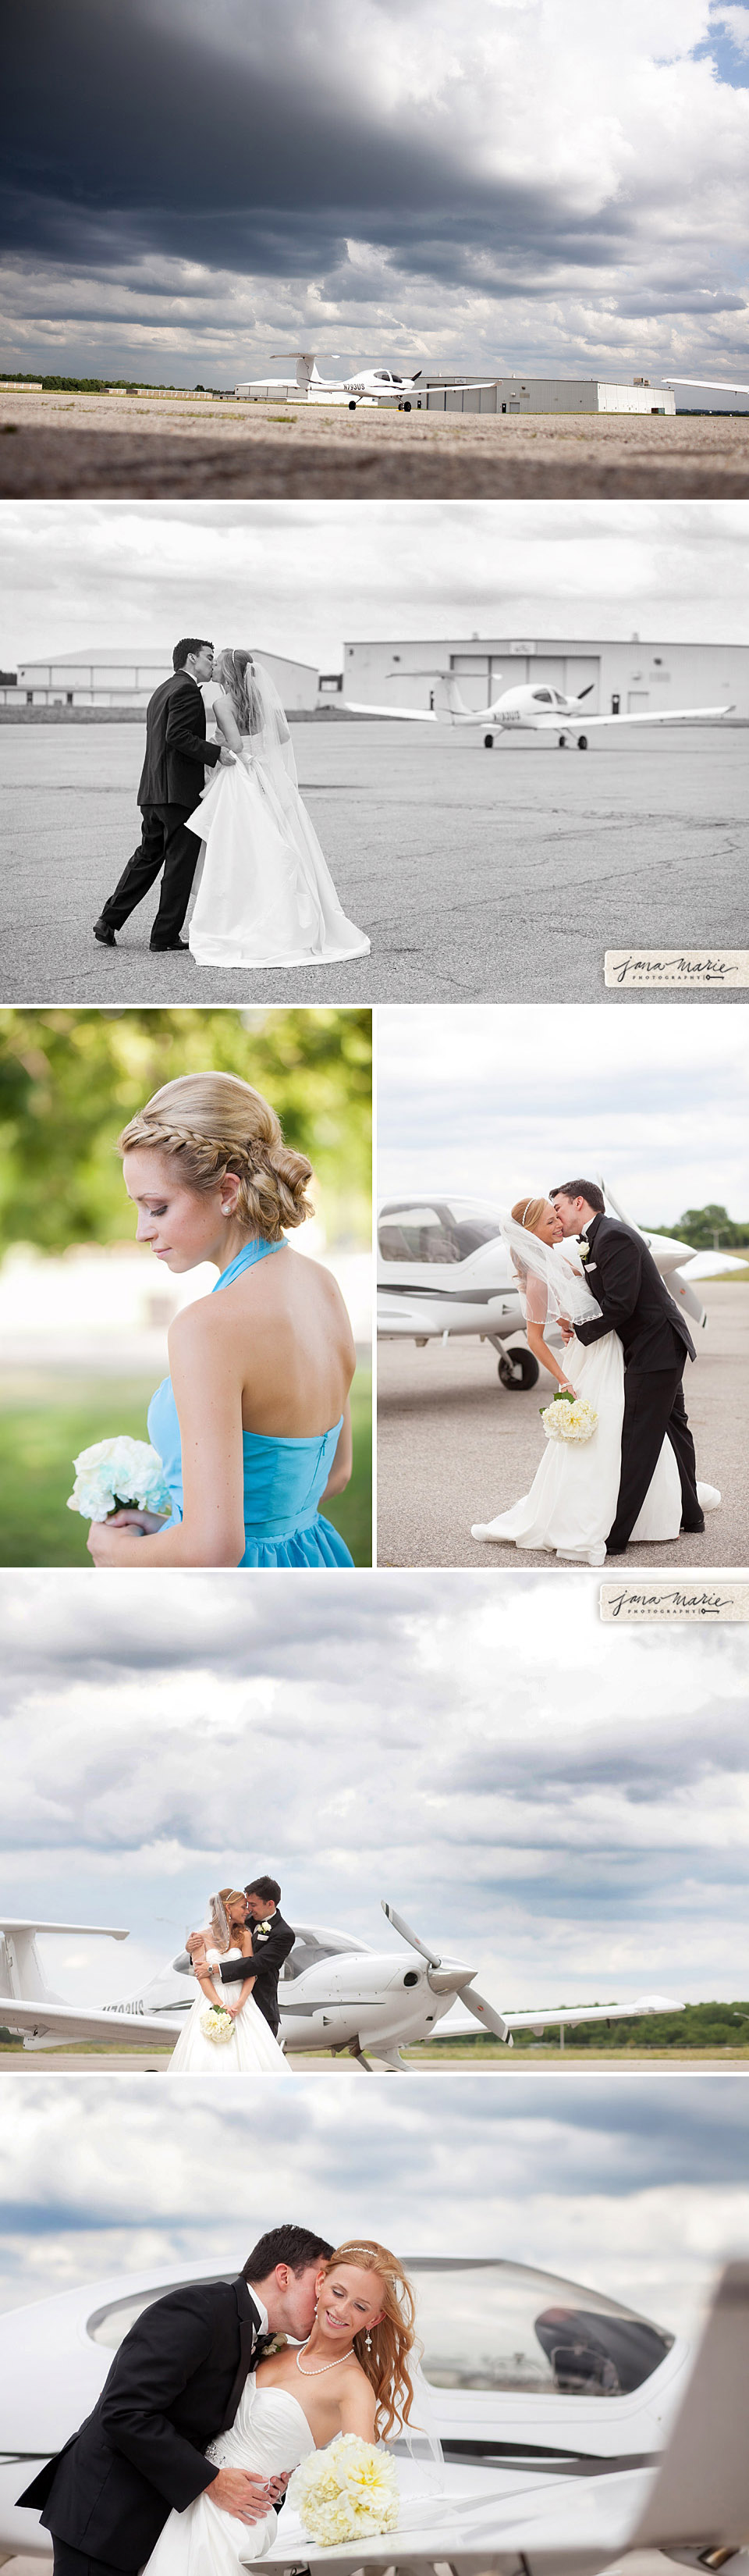 Airplane, Prince of Peace Church, Catholic weddings, Kansas City wedding photographer, bridesmaid, Blue dresses, dip